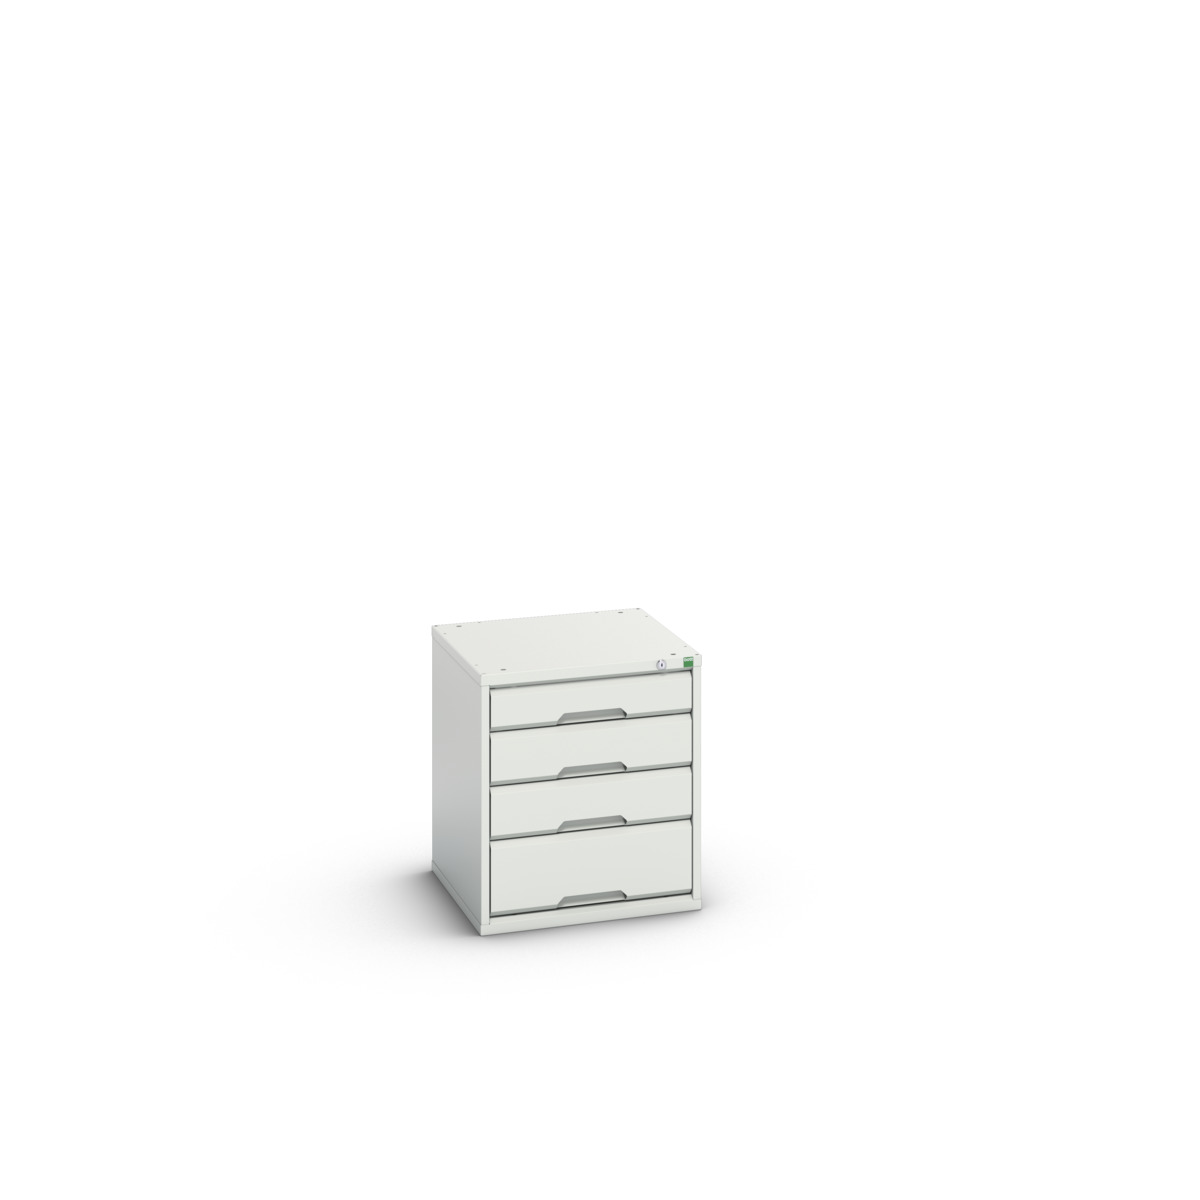 16925004.16 - verso drawer cabinet